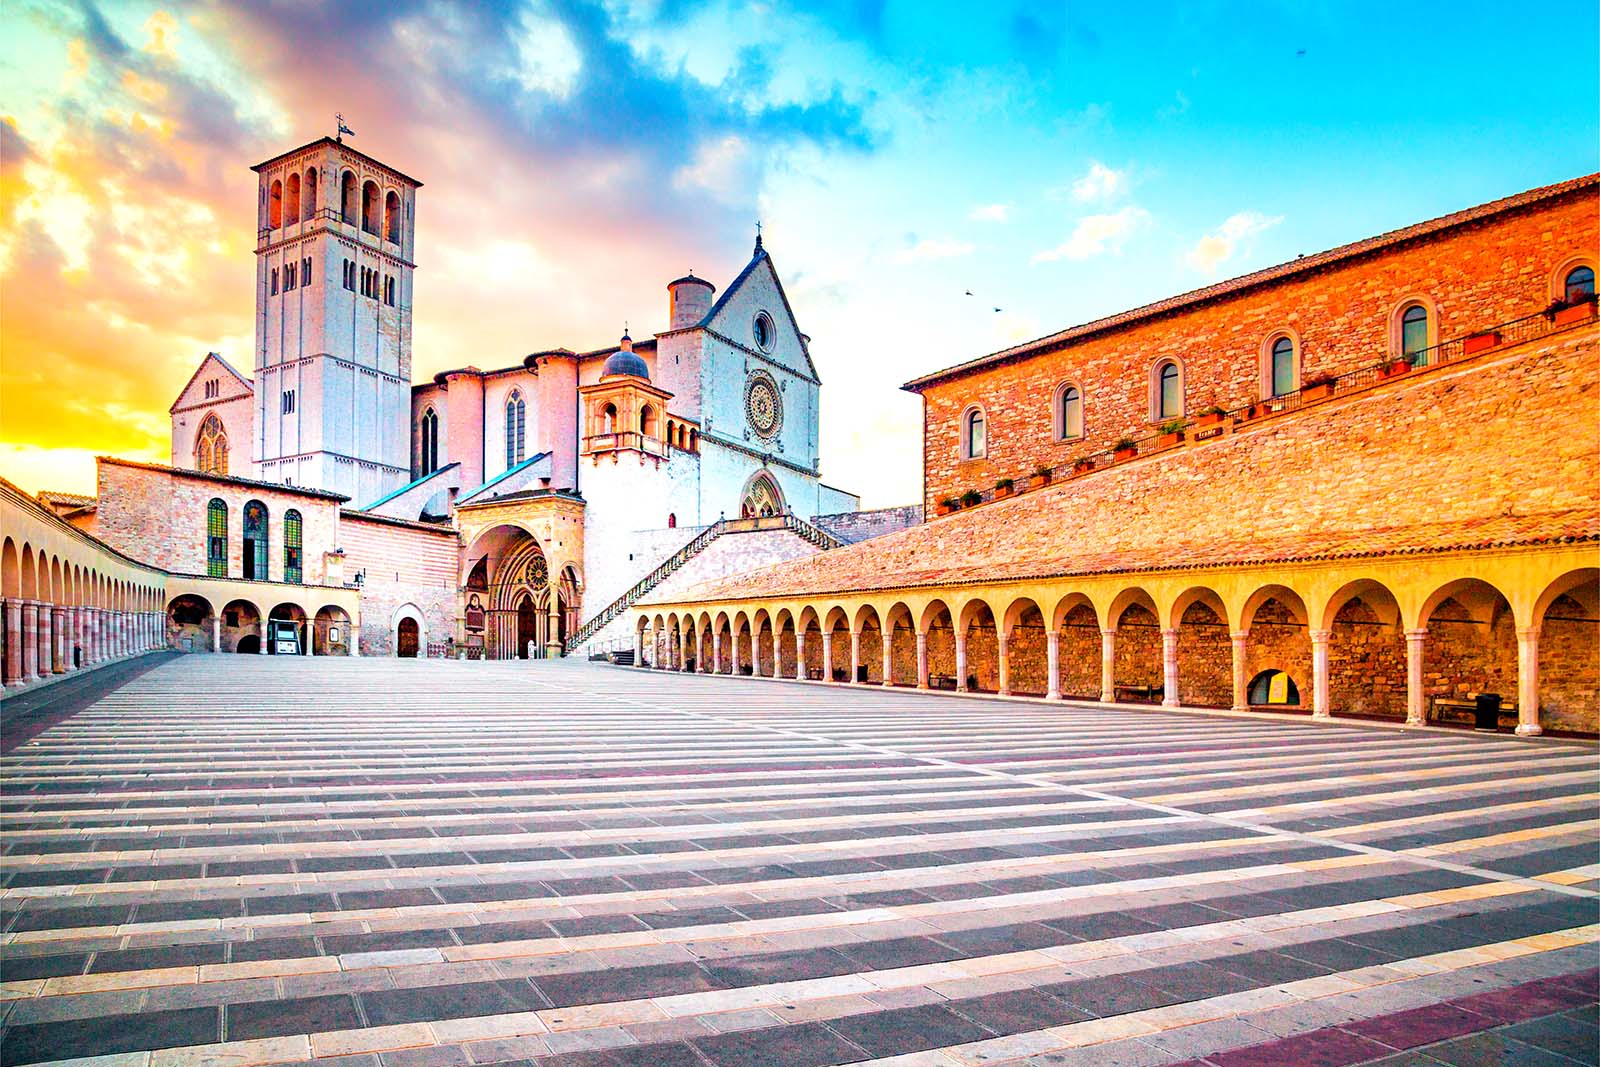 St Francis of Assisi Basilica